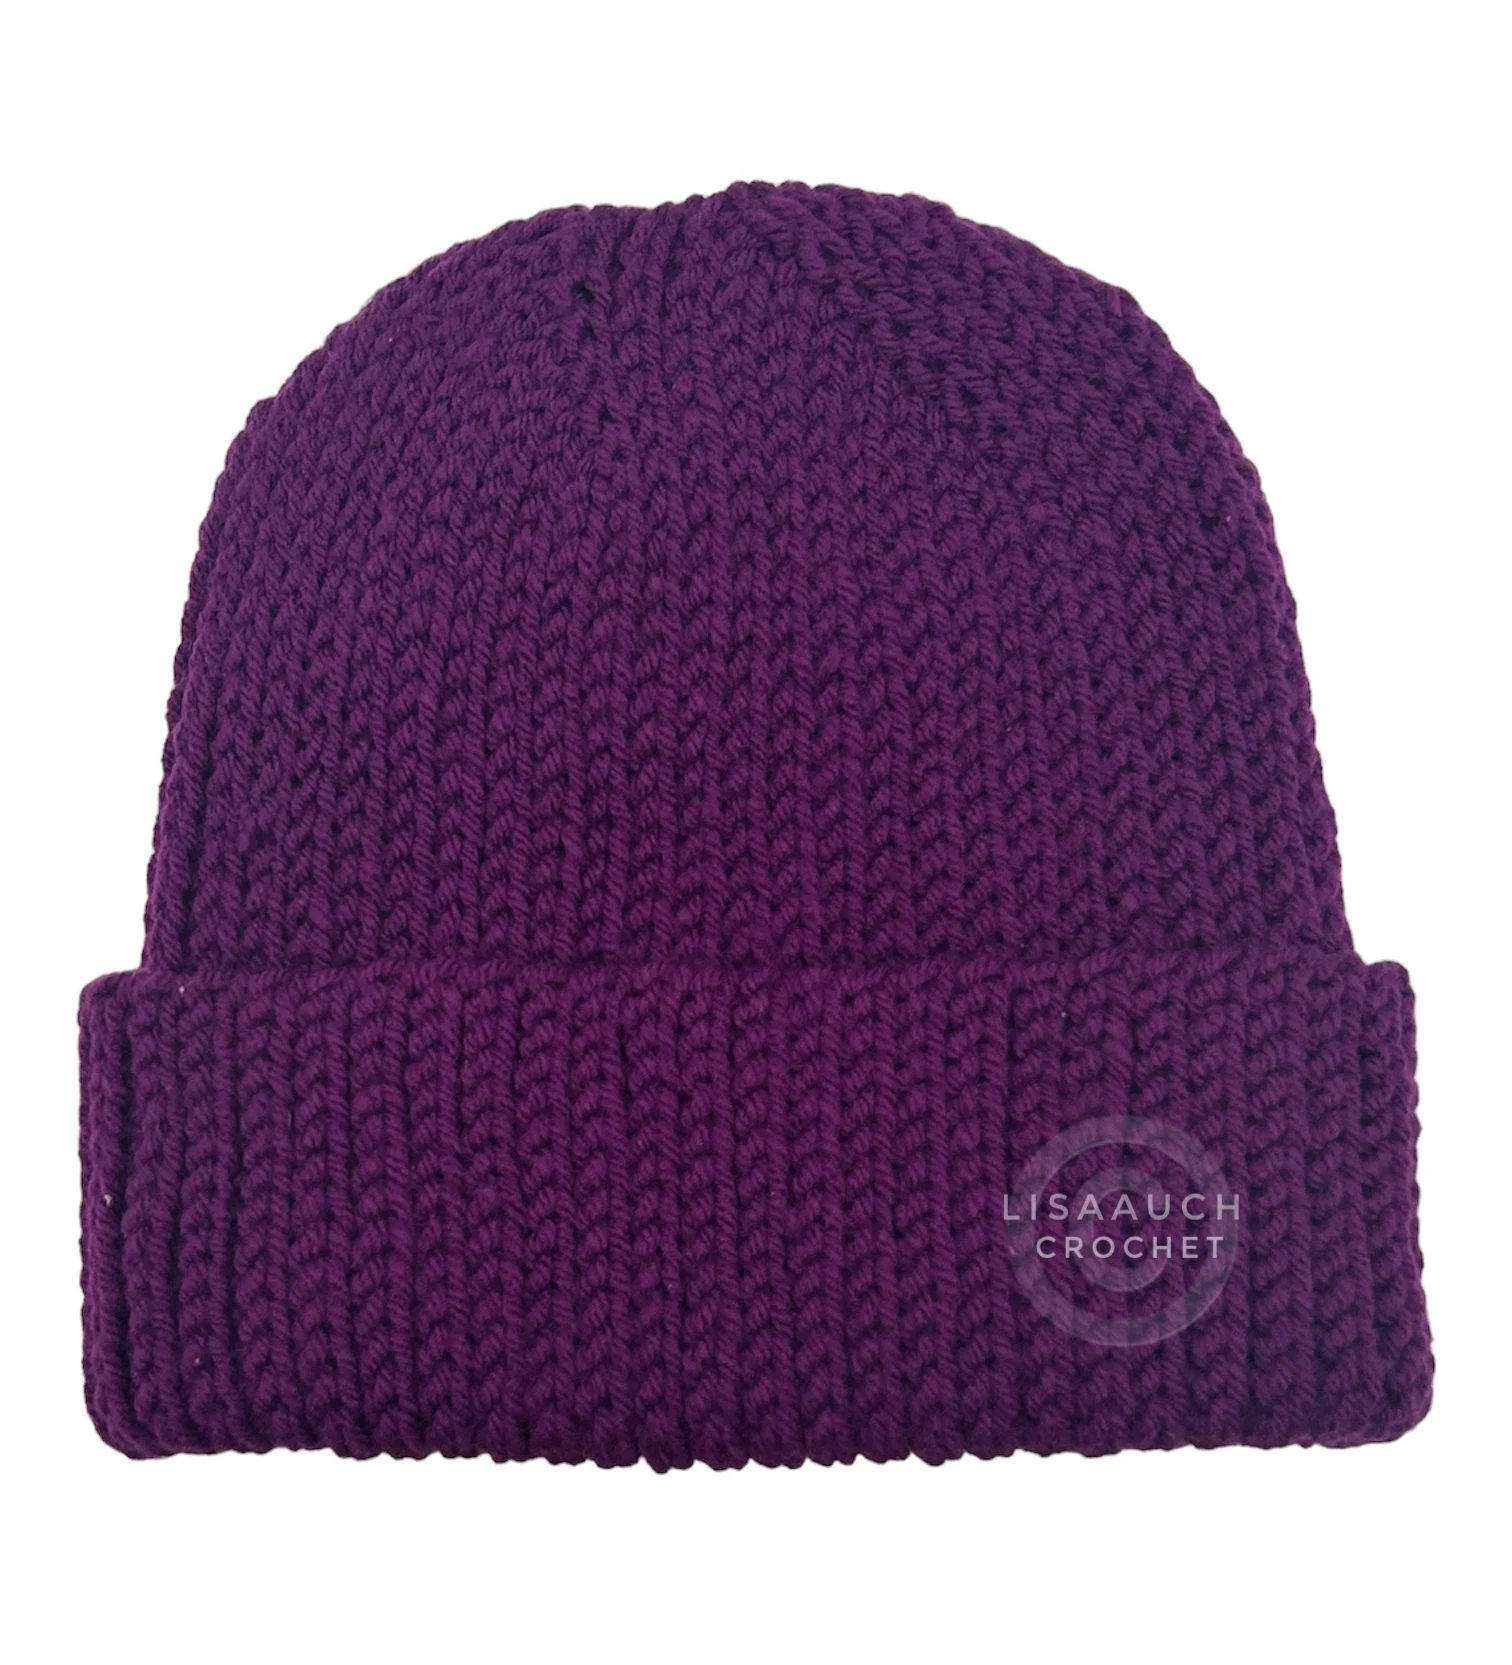 Free Crochet Hat Pattern: All Ribbed Crochet Hat Design